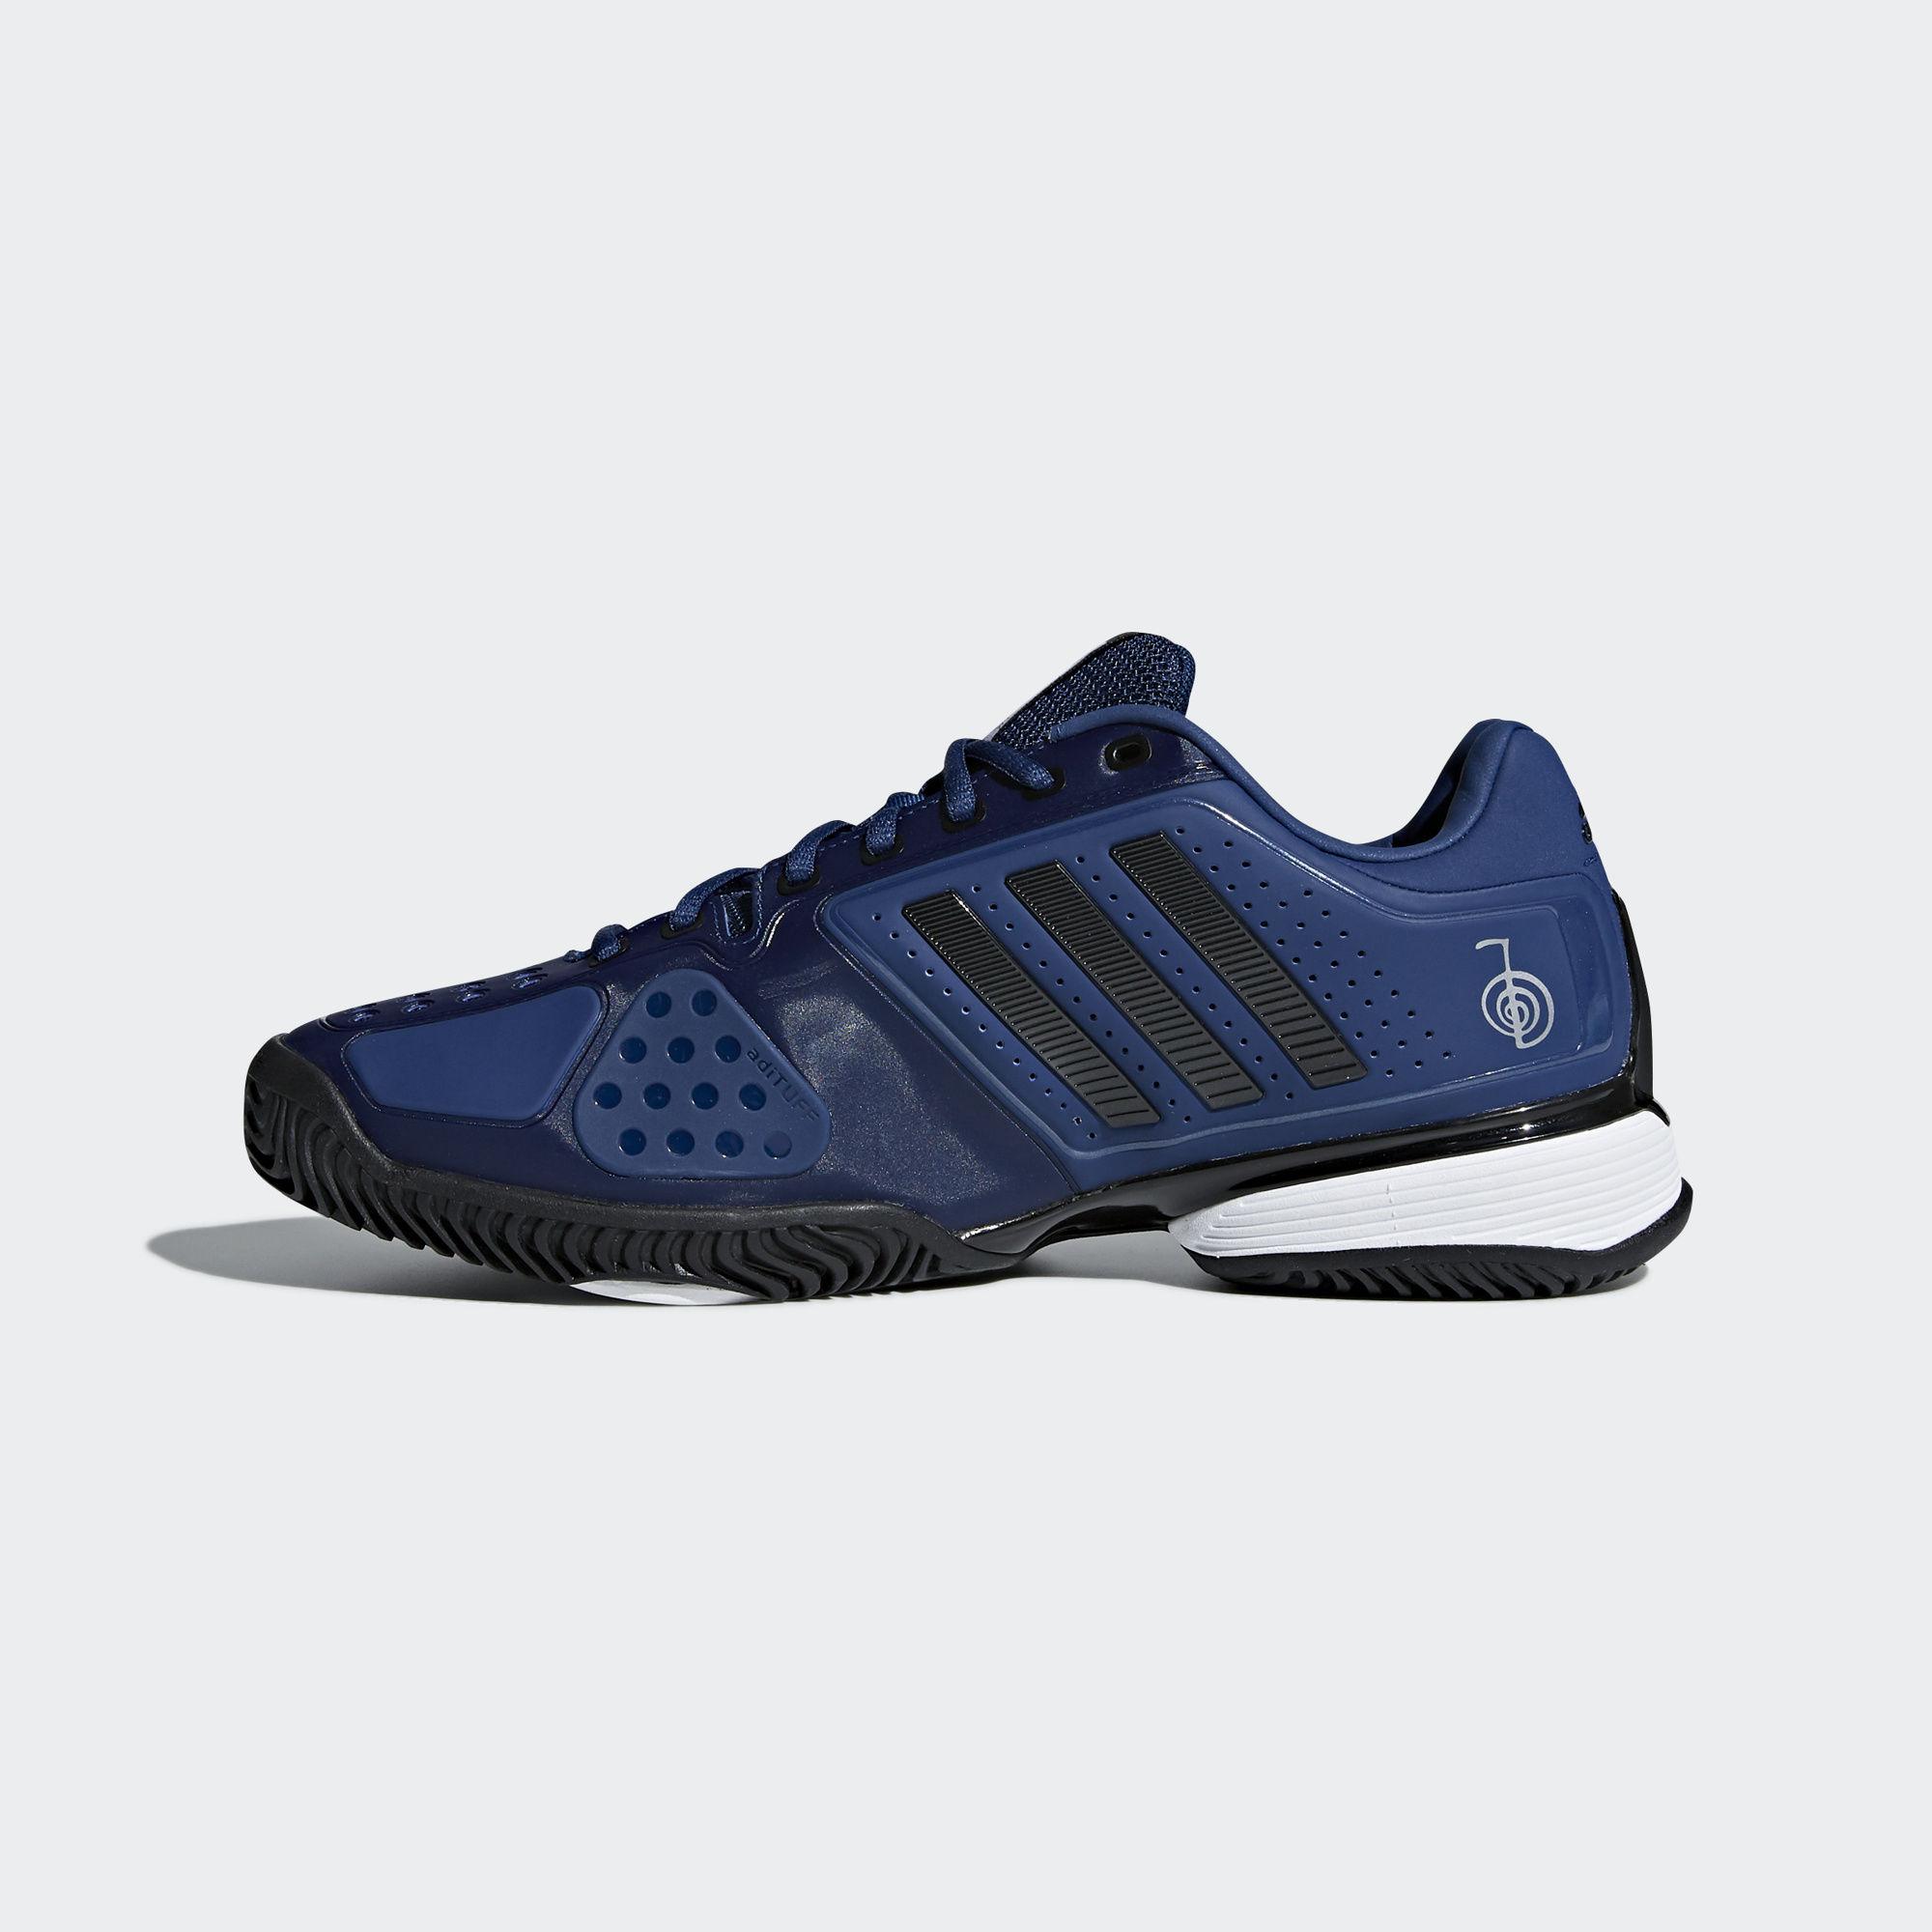 Adidas Mens Novak Pro Tennis Shoes  Blue  Tennisnuts.com